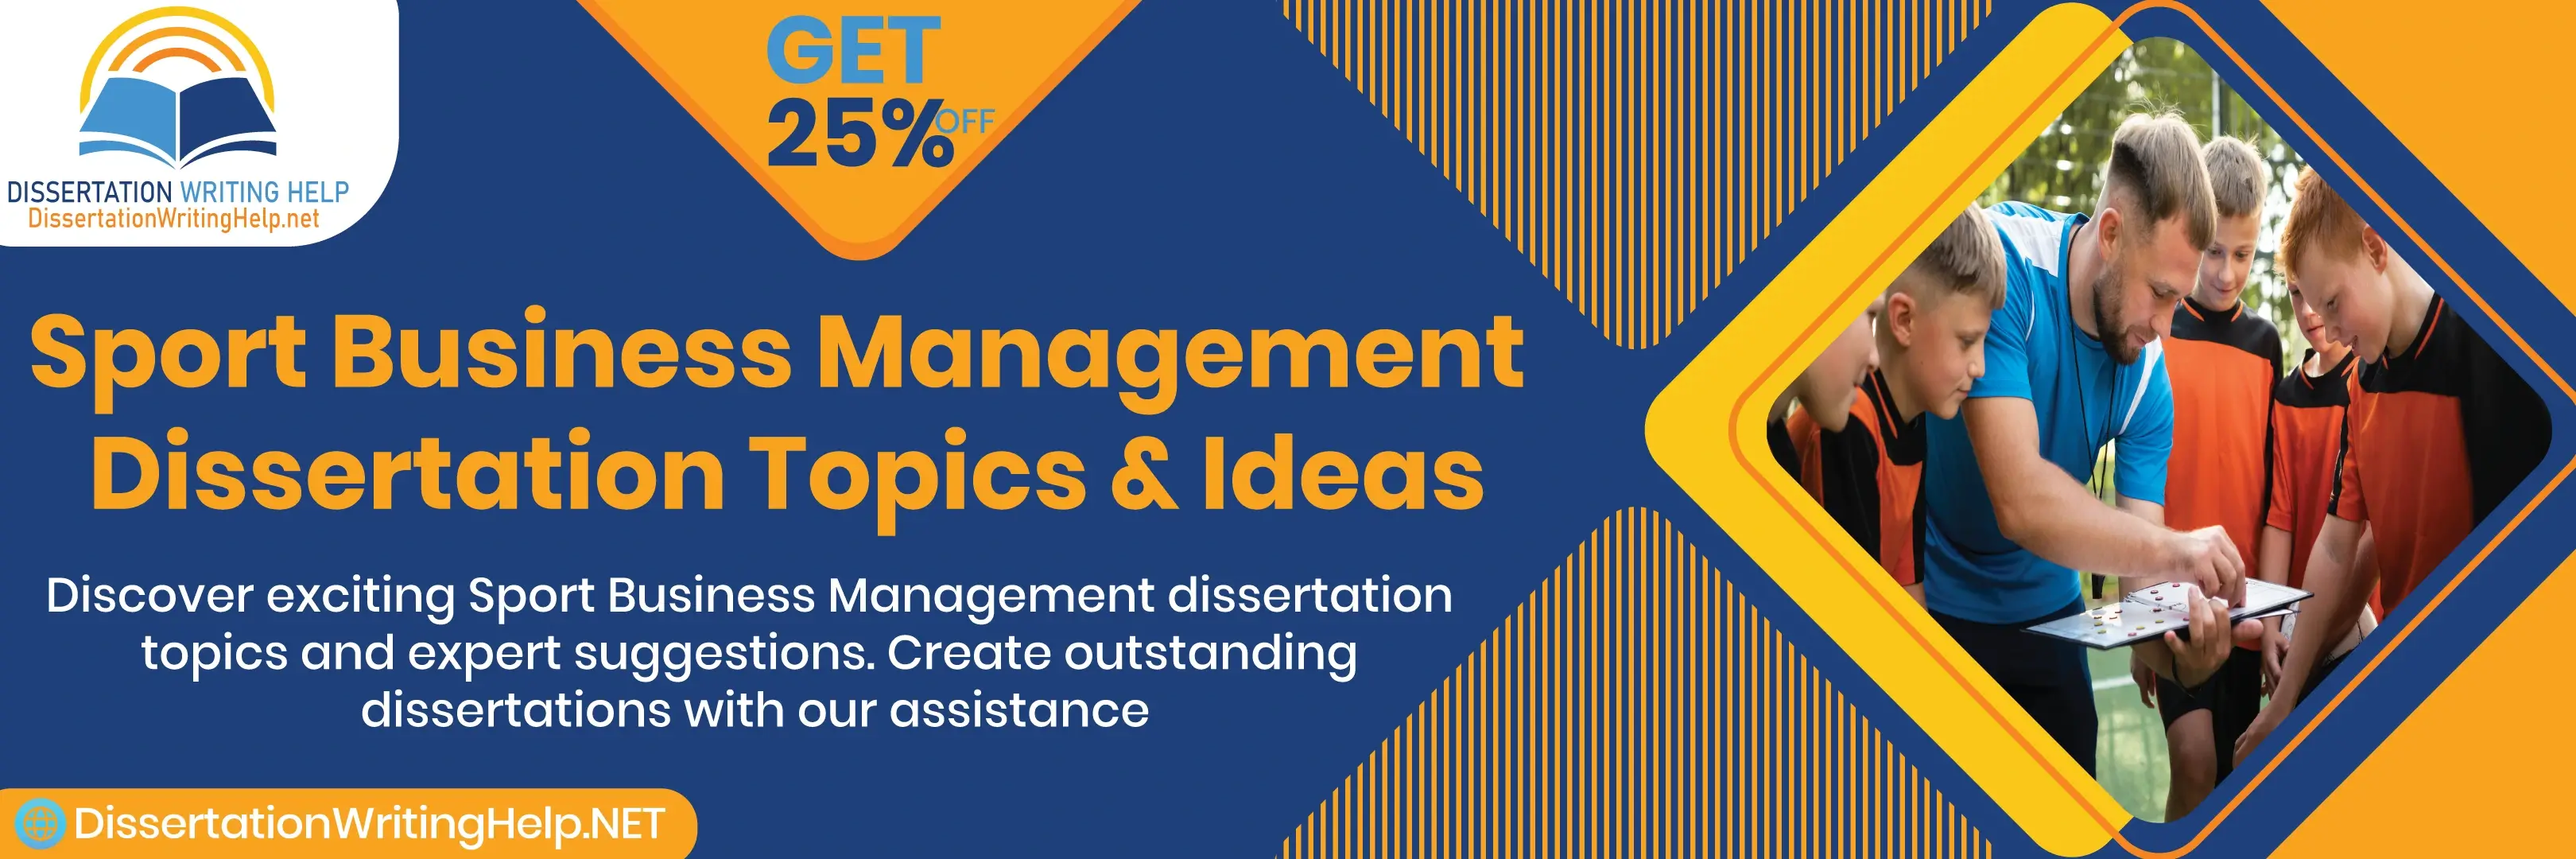 Sport-Business-Management-Dissertation-Topics-&-Ideas